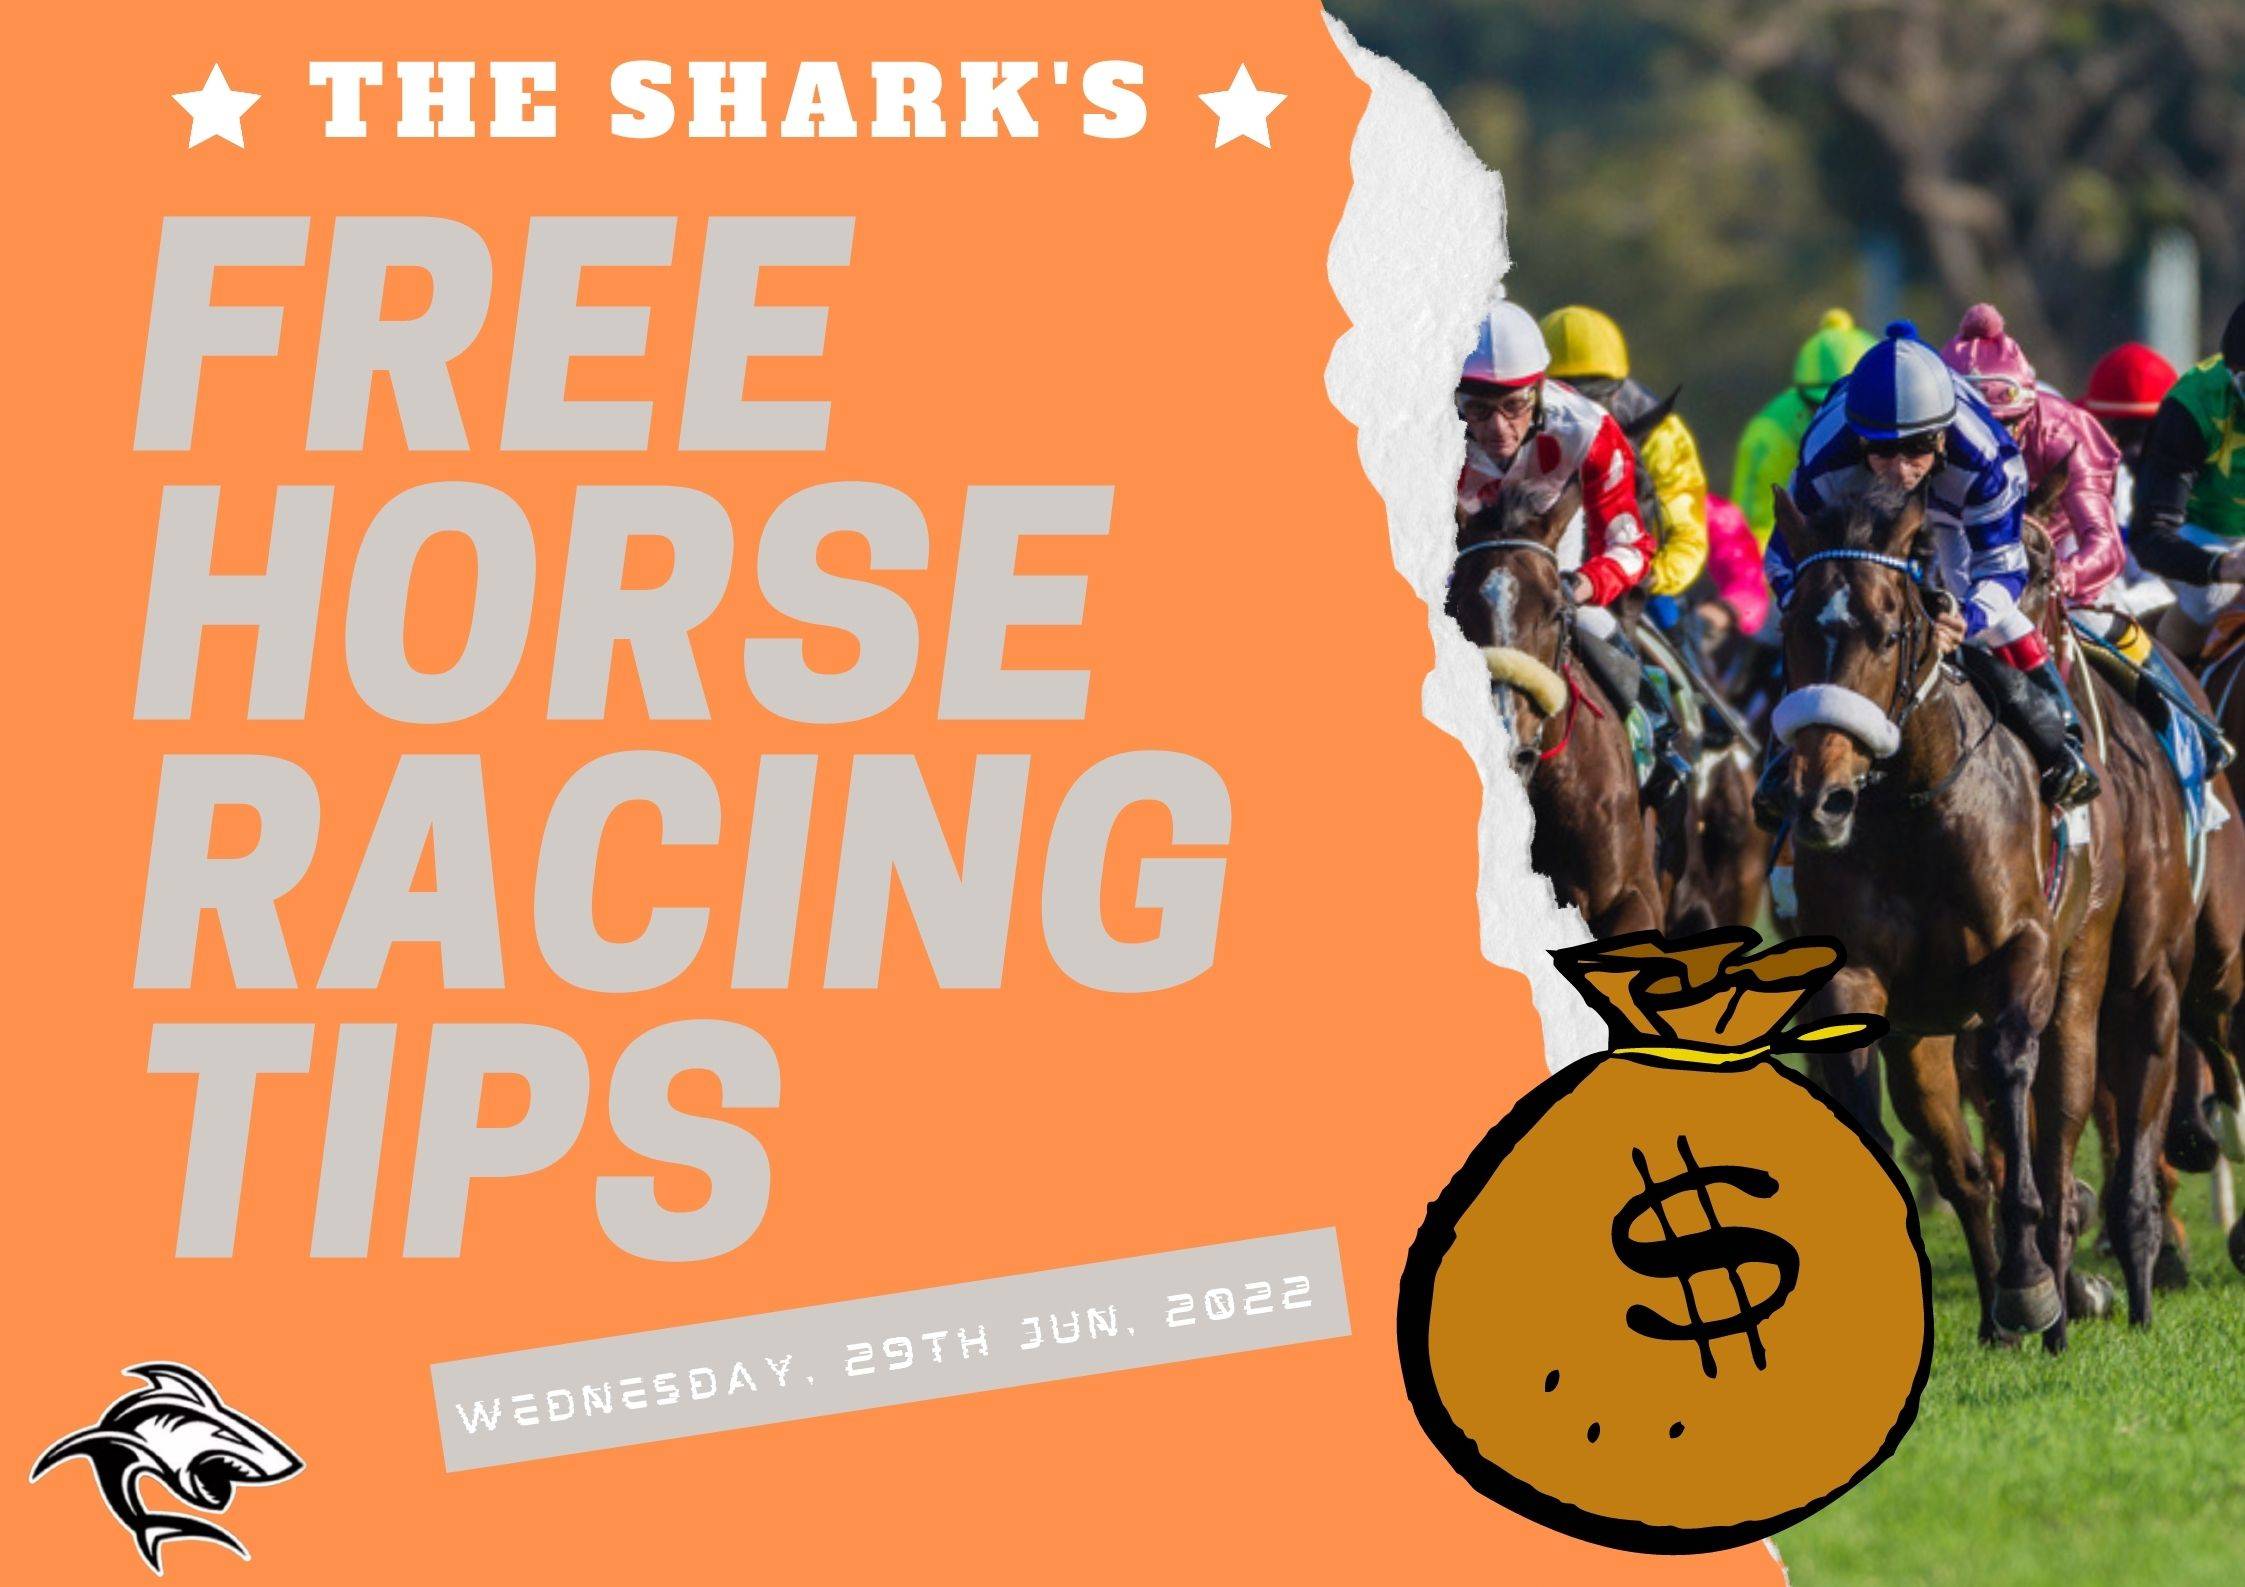 Free Horse Racing Tips - 29th Jun